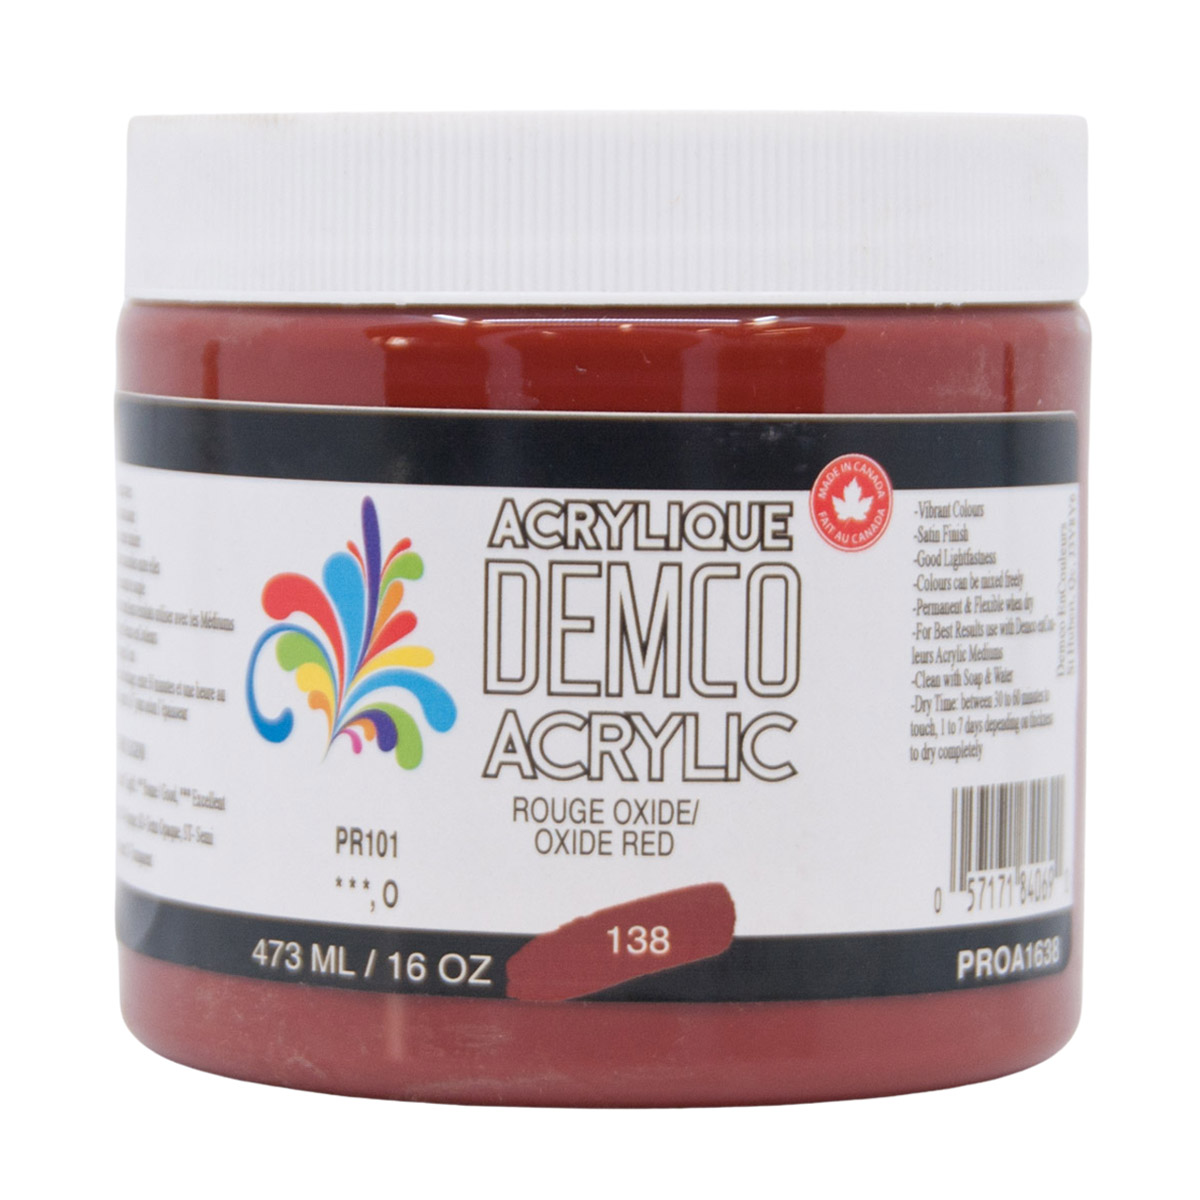 Demco Acrylic Oxide Red 473ml/16oz